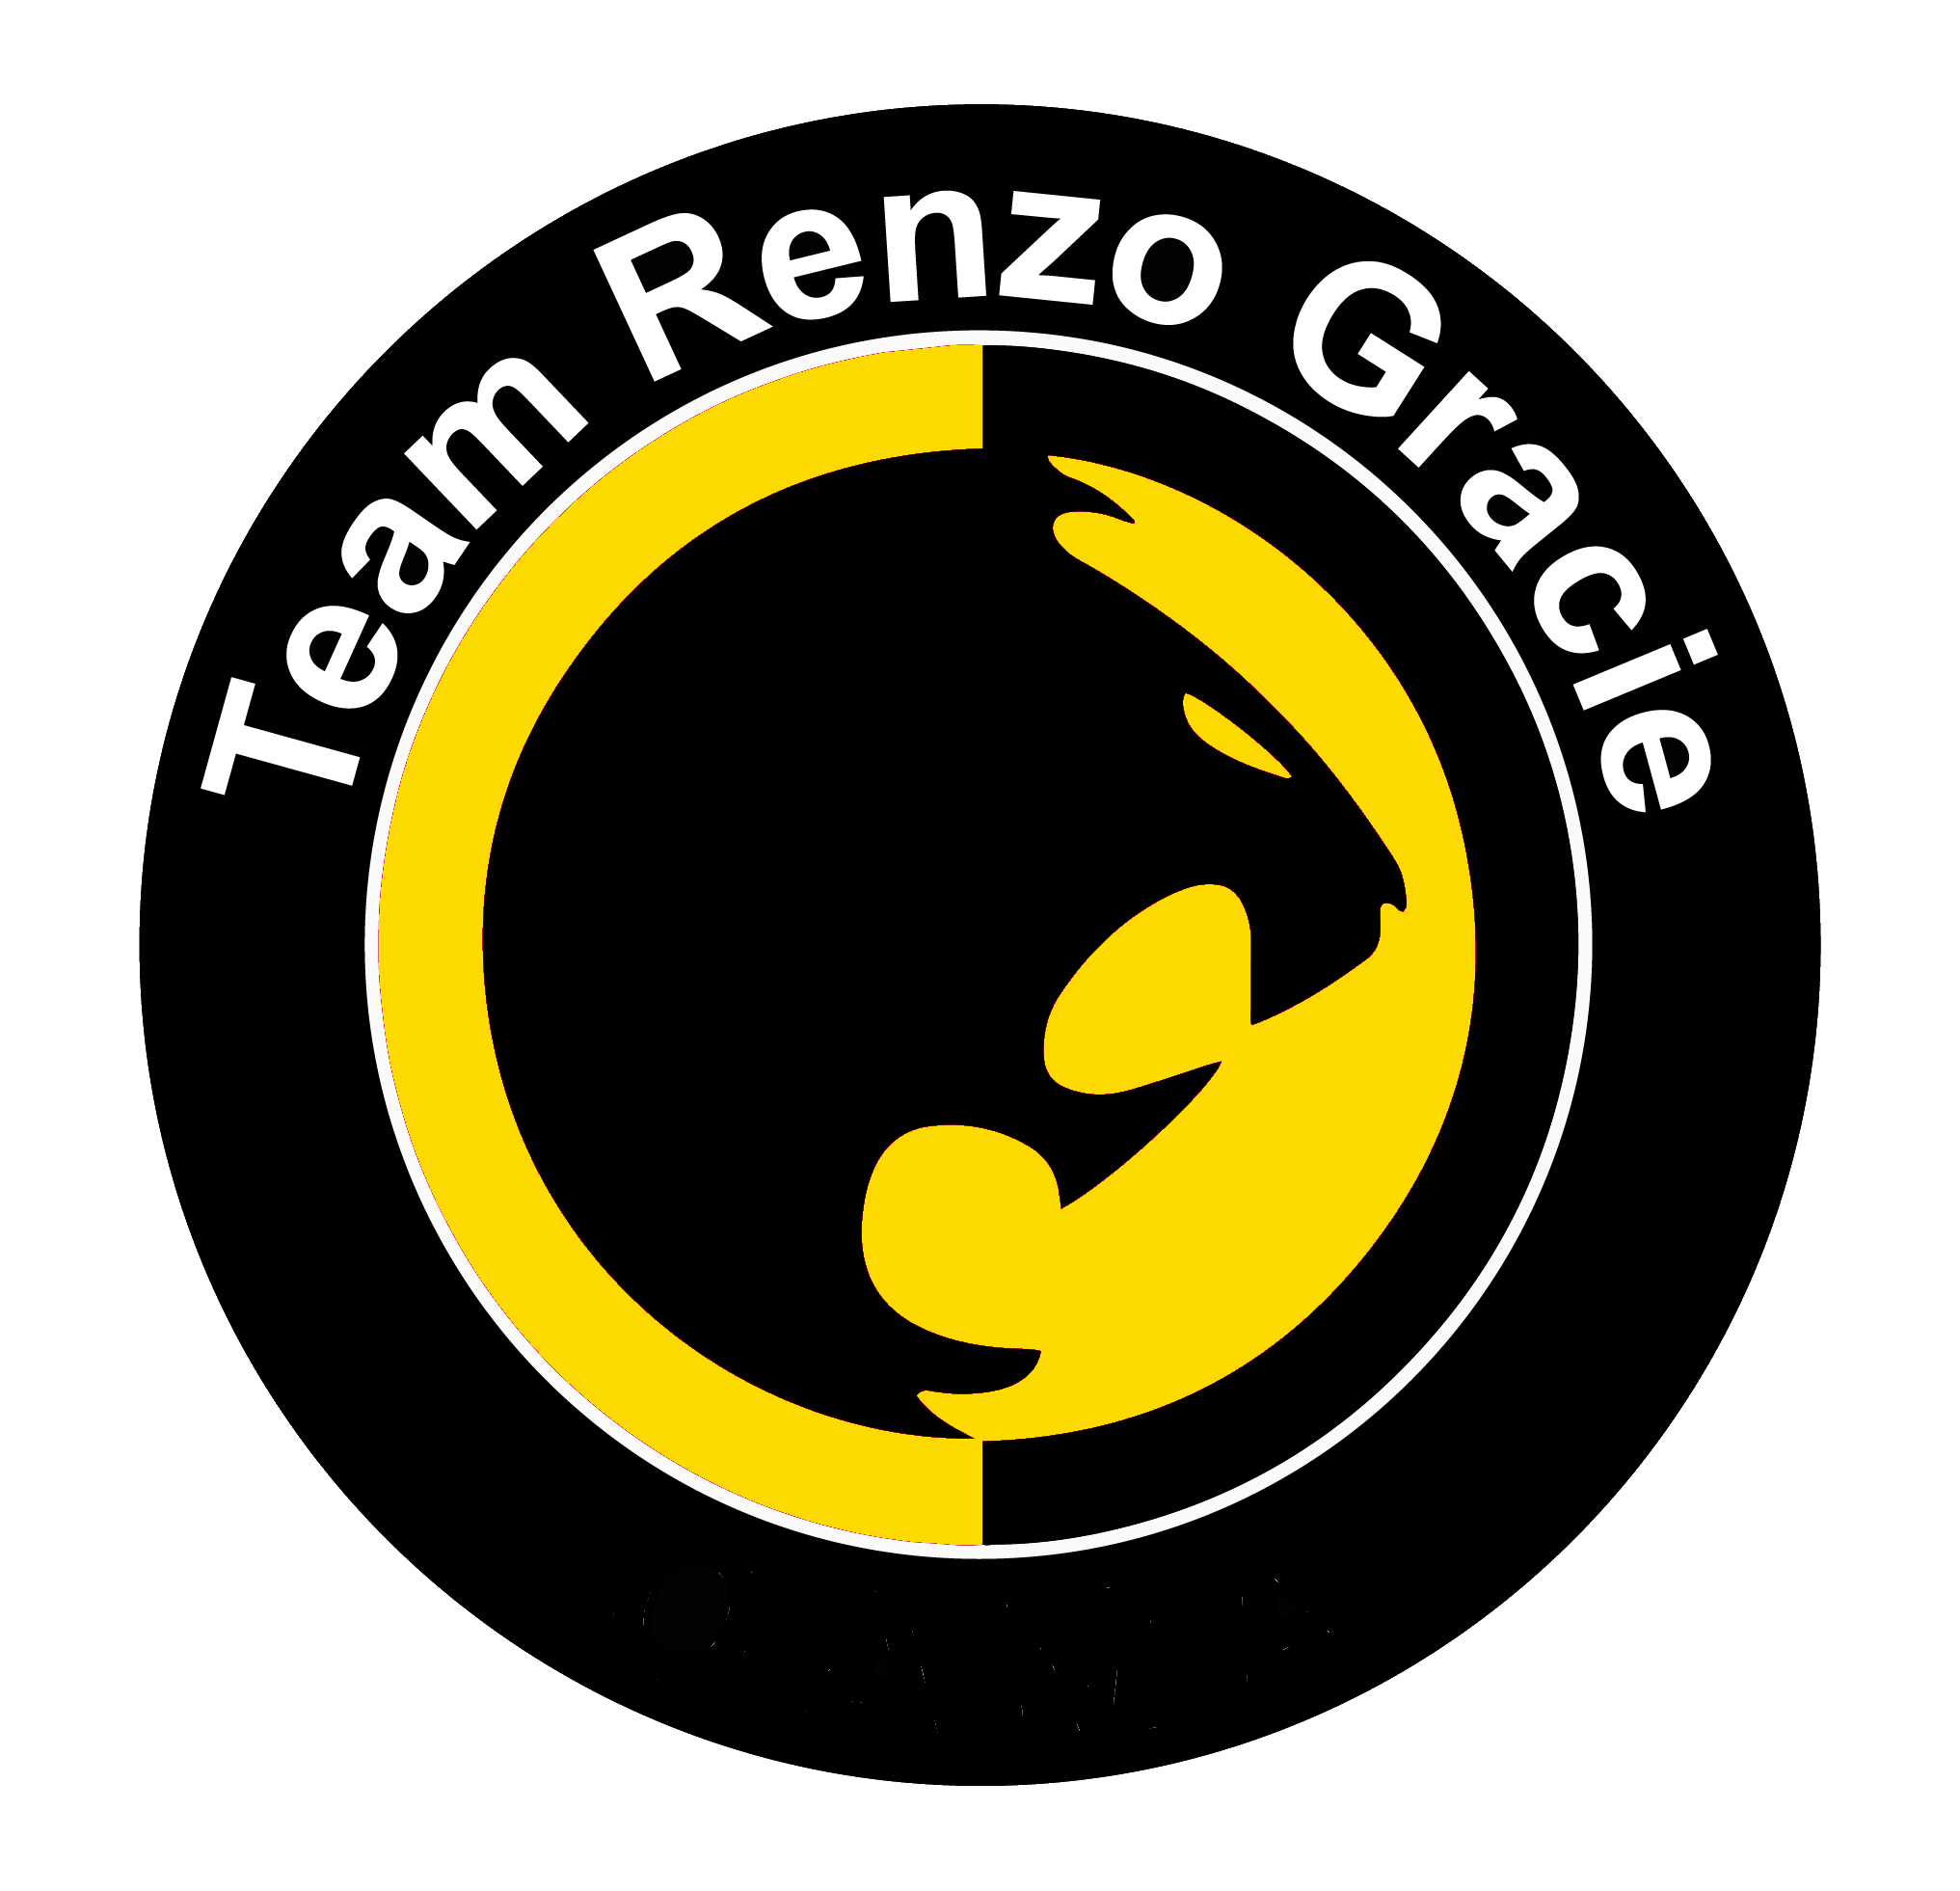 Bairro | Affilate of Team Renzo Gracie